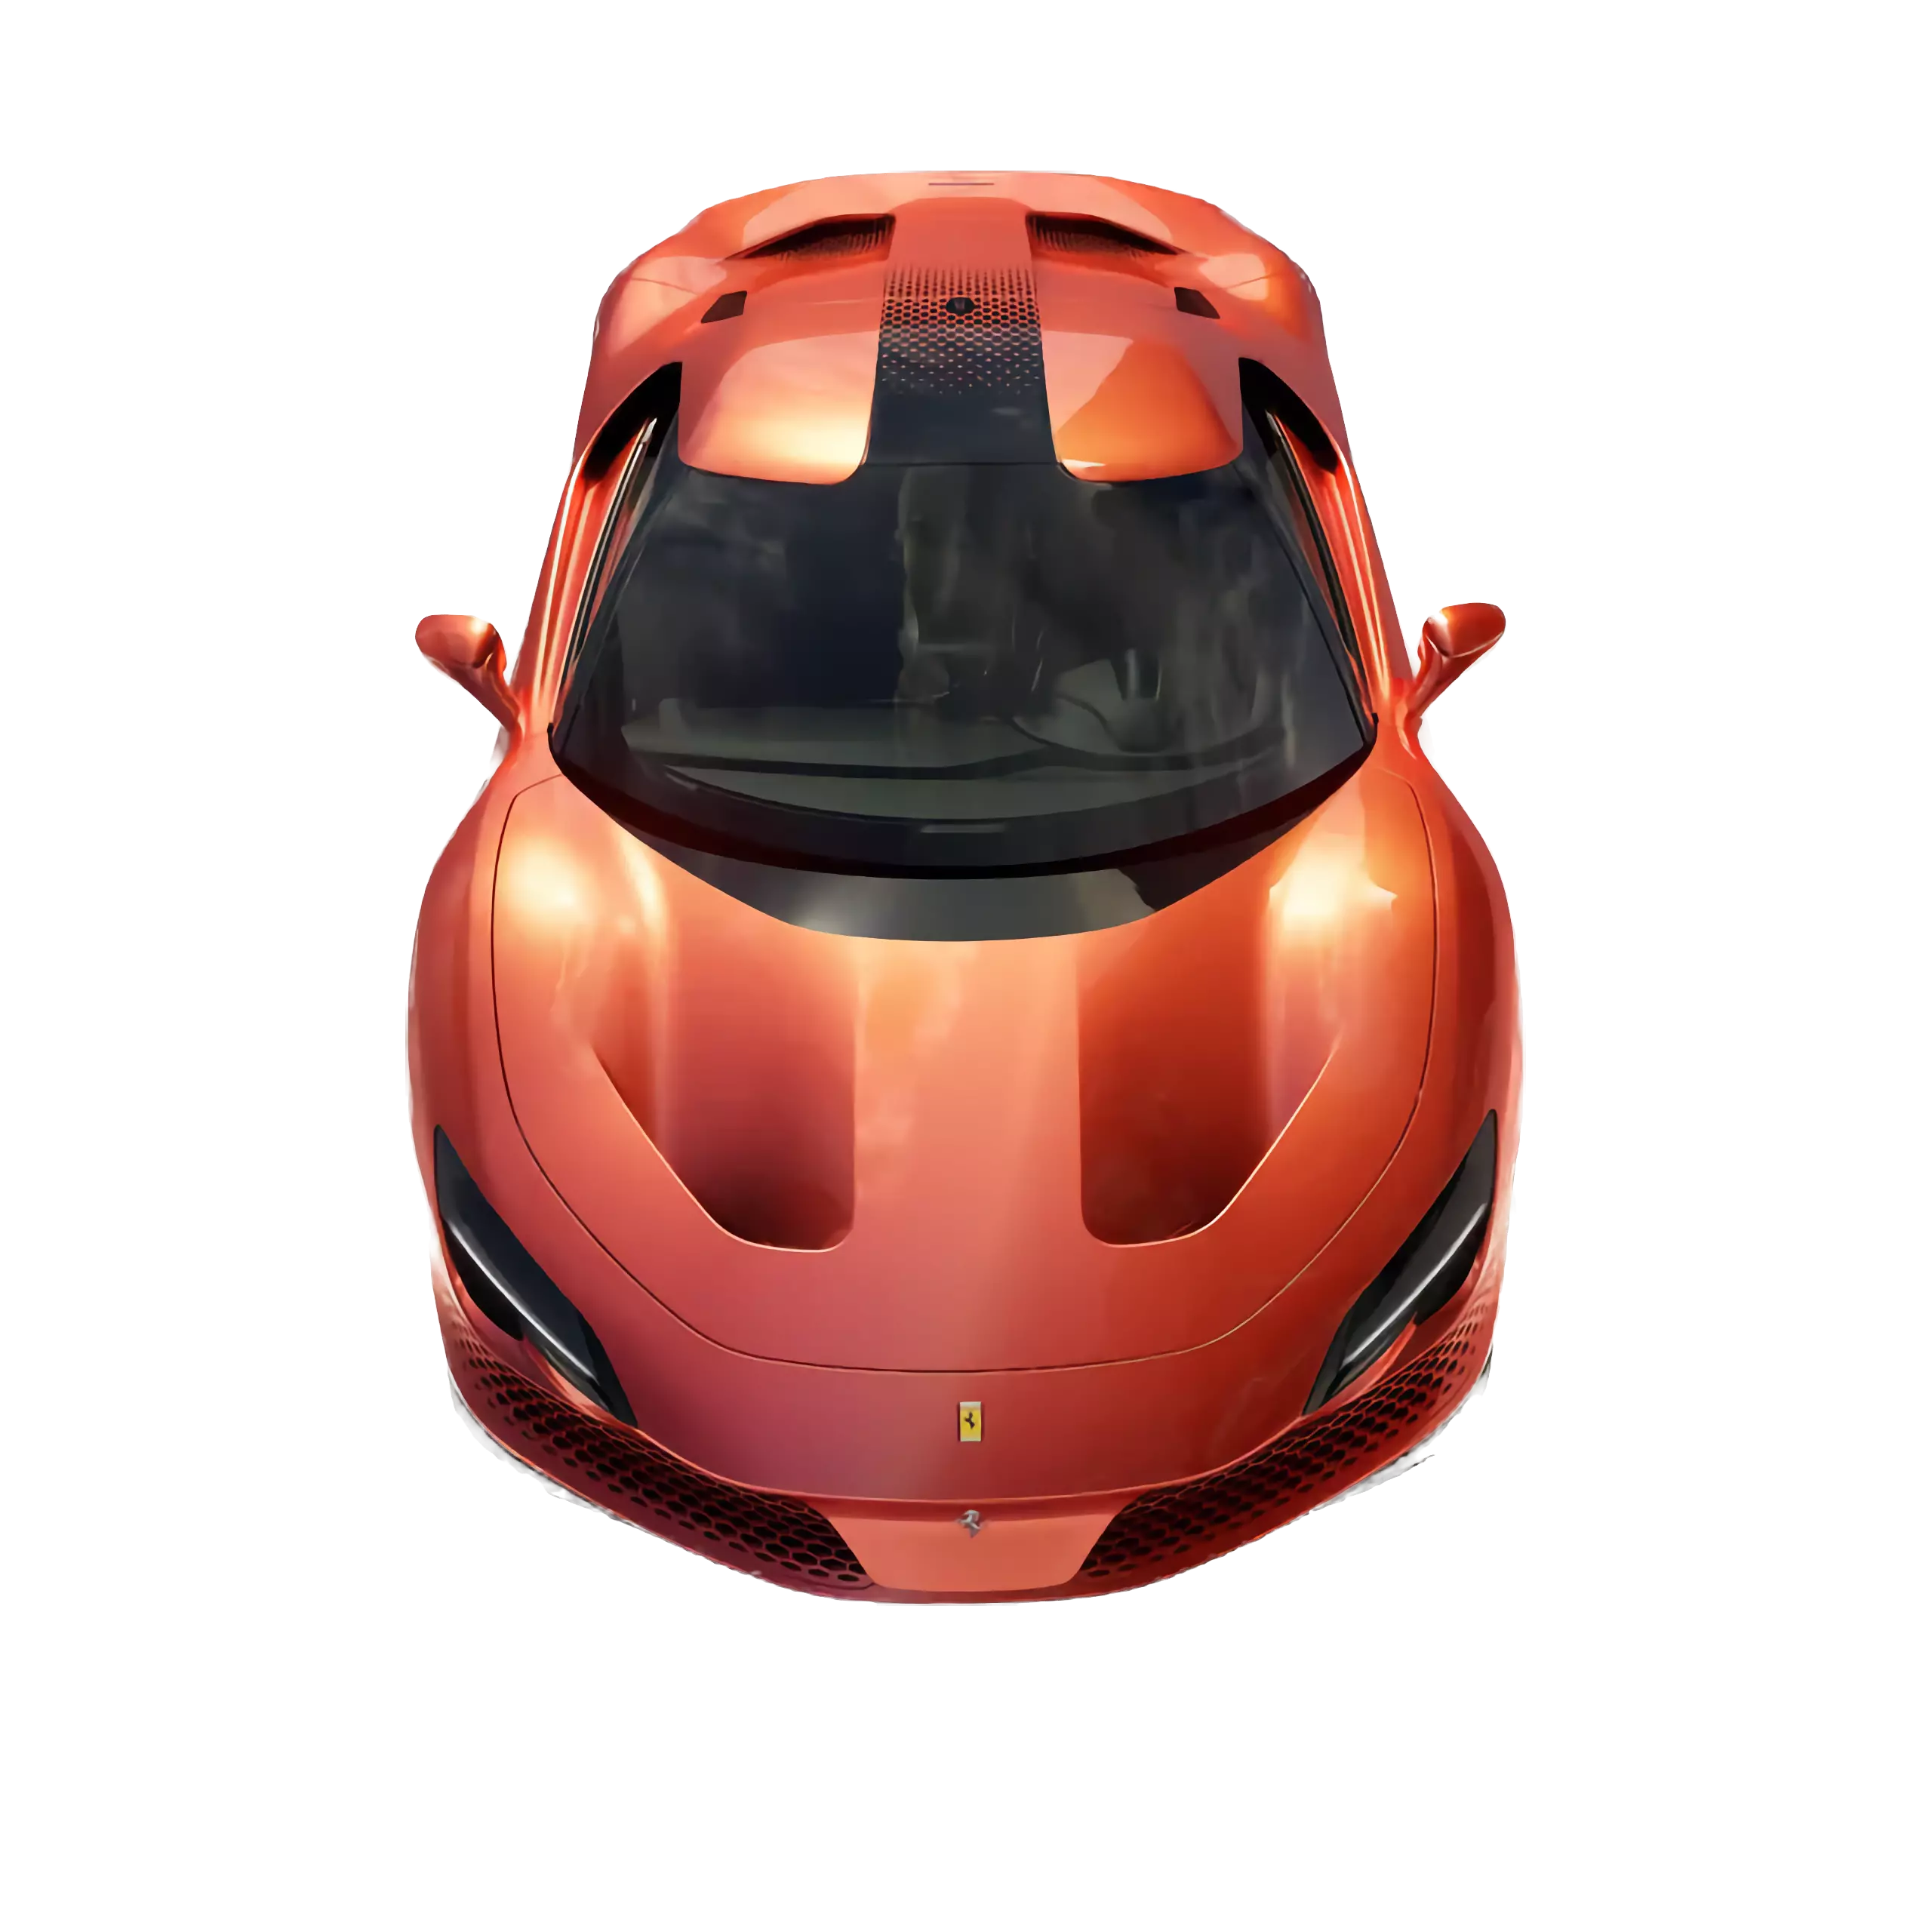 A cartoonish Ferrari as the Garage Italia Customs case study header image